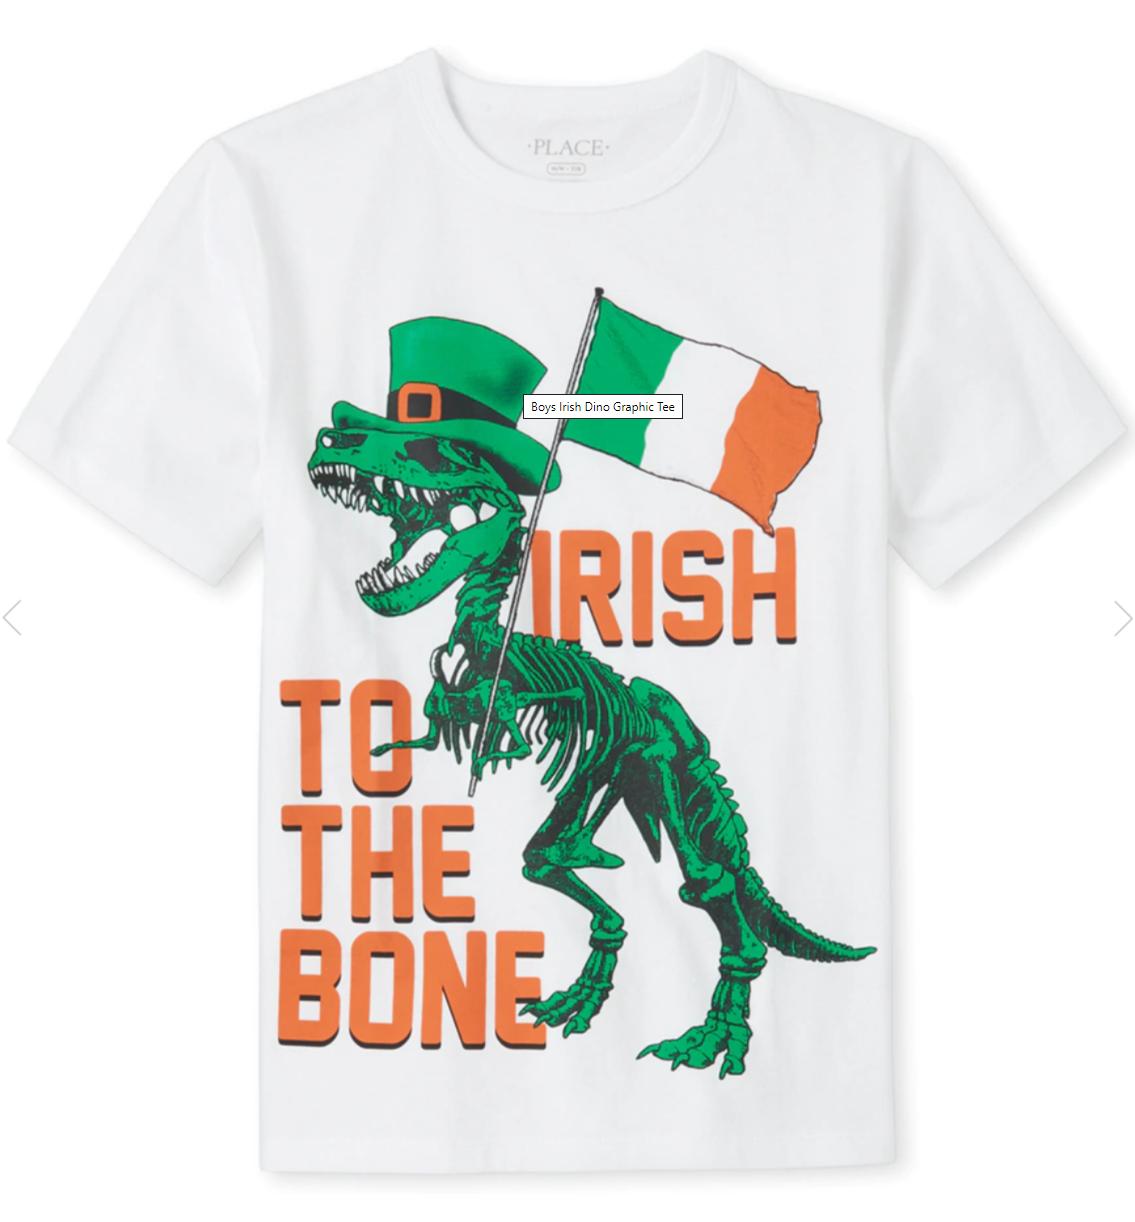 Big Boys' Irish Dino Graphic Tee (Sizes 5-16)